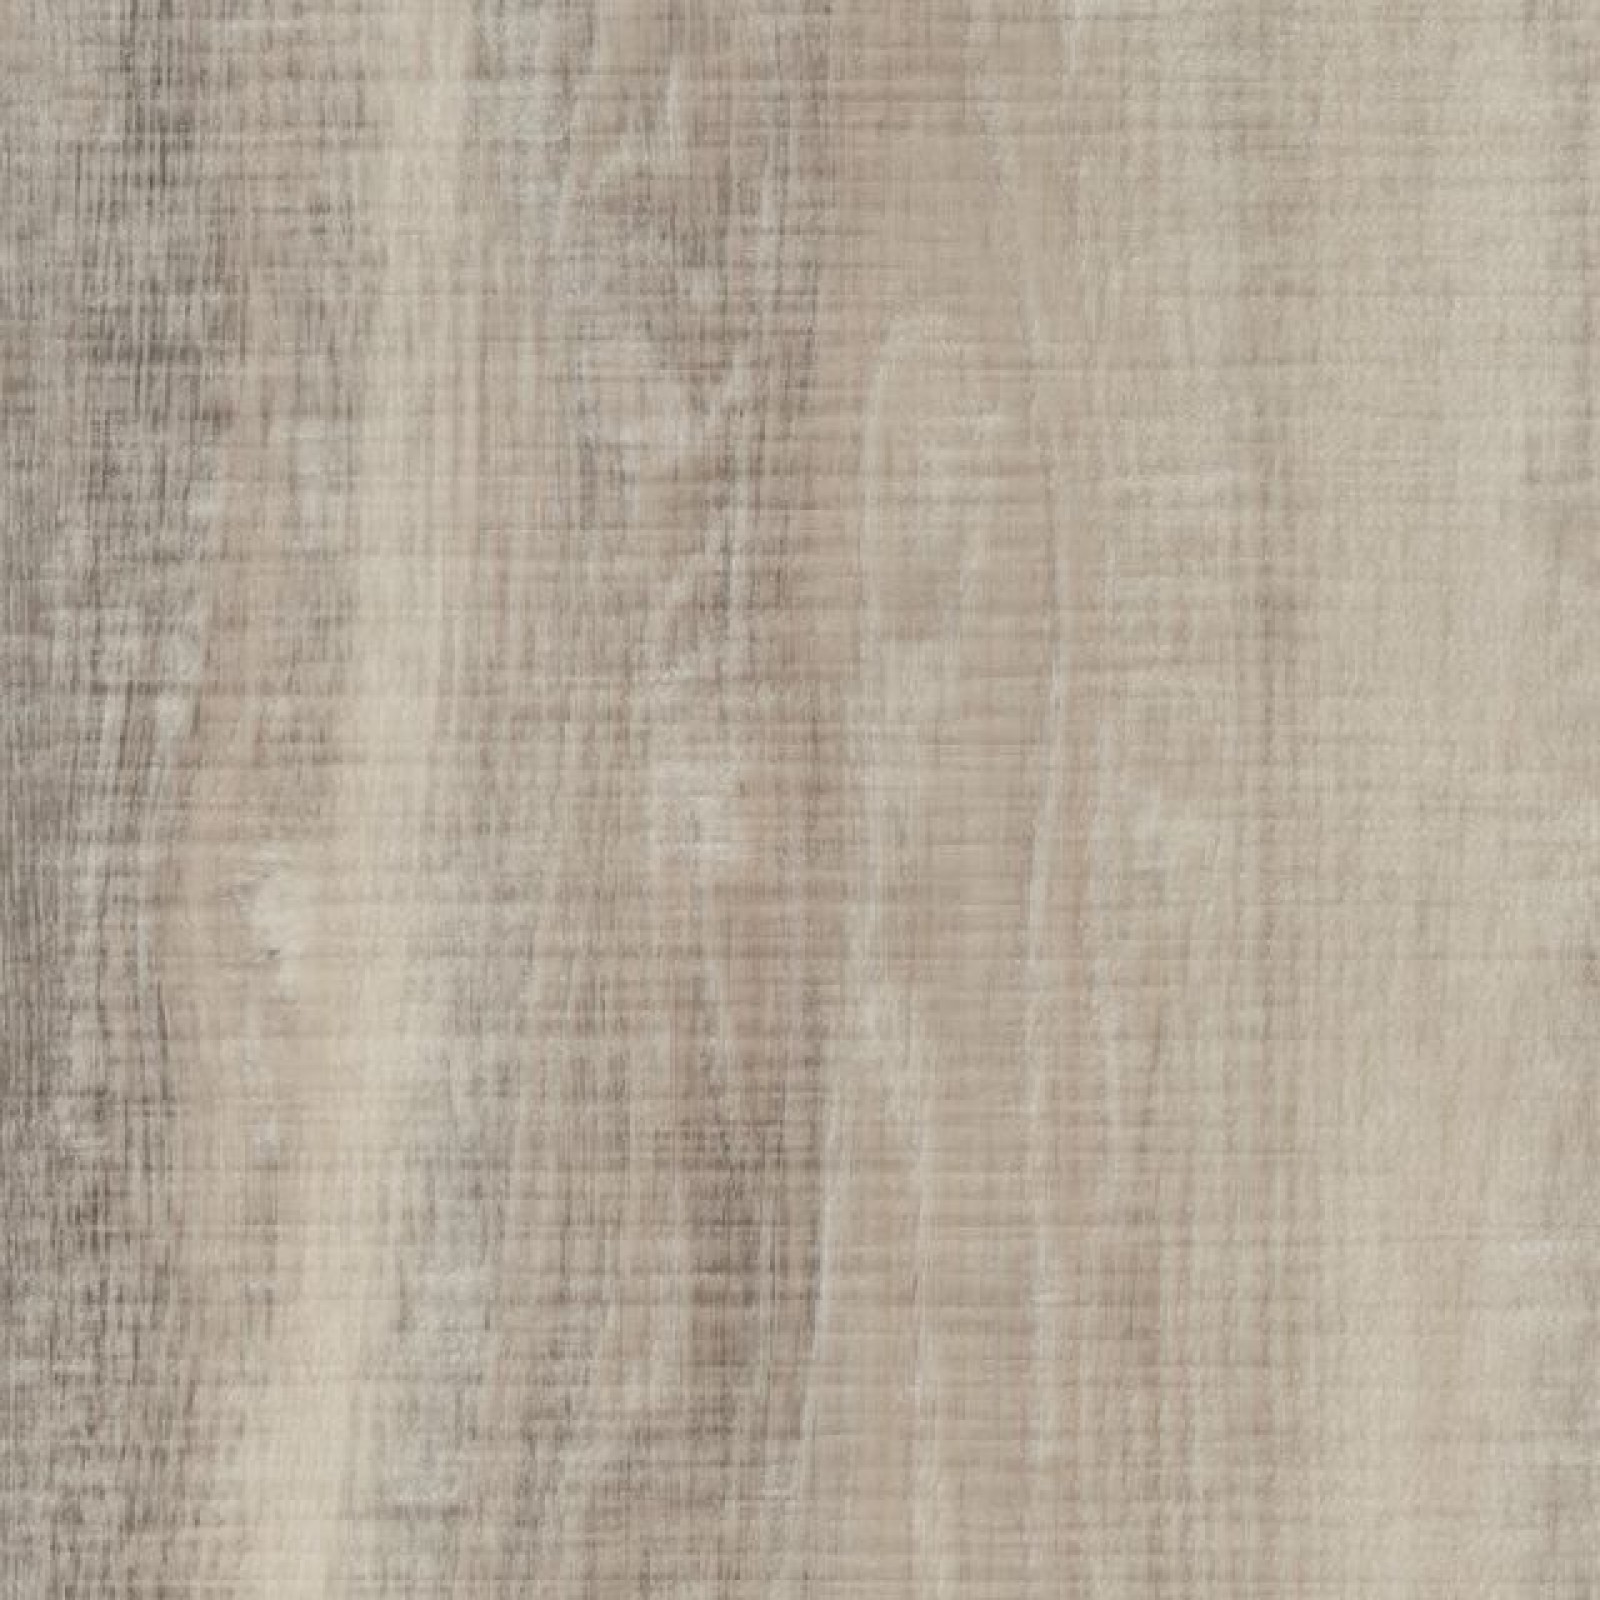 Vzor - 60151FL1 white raw timber